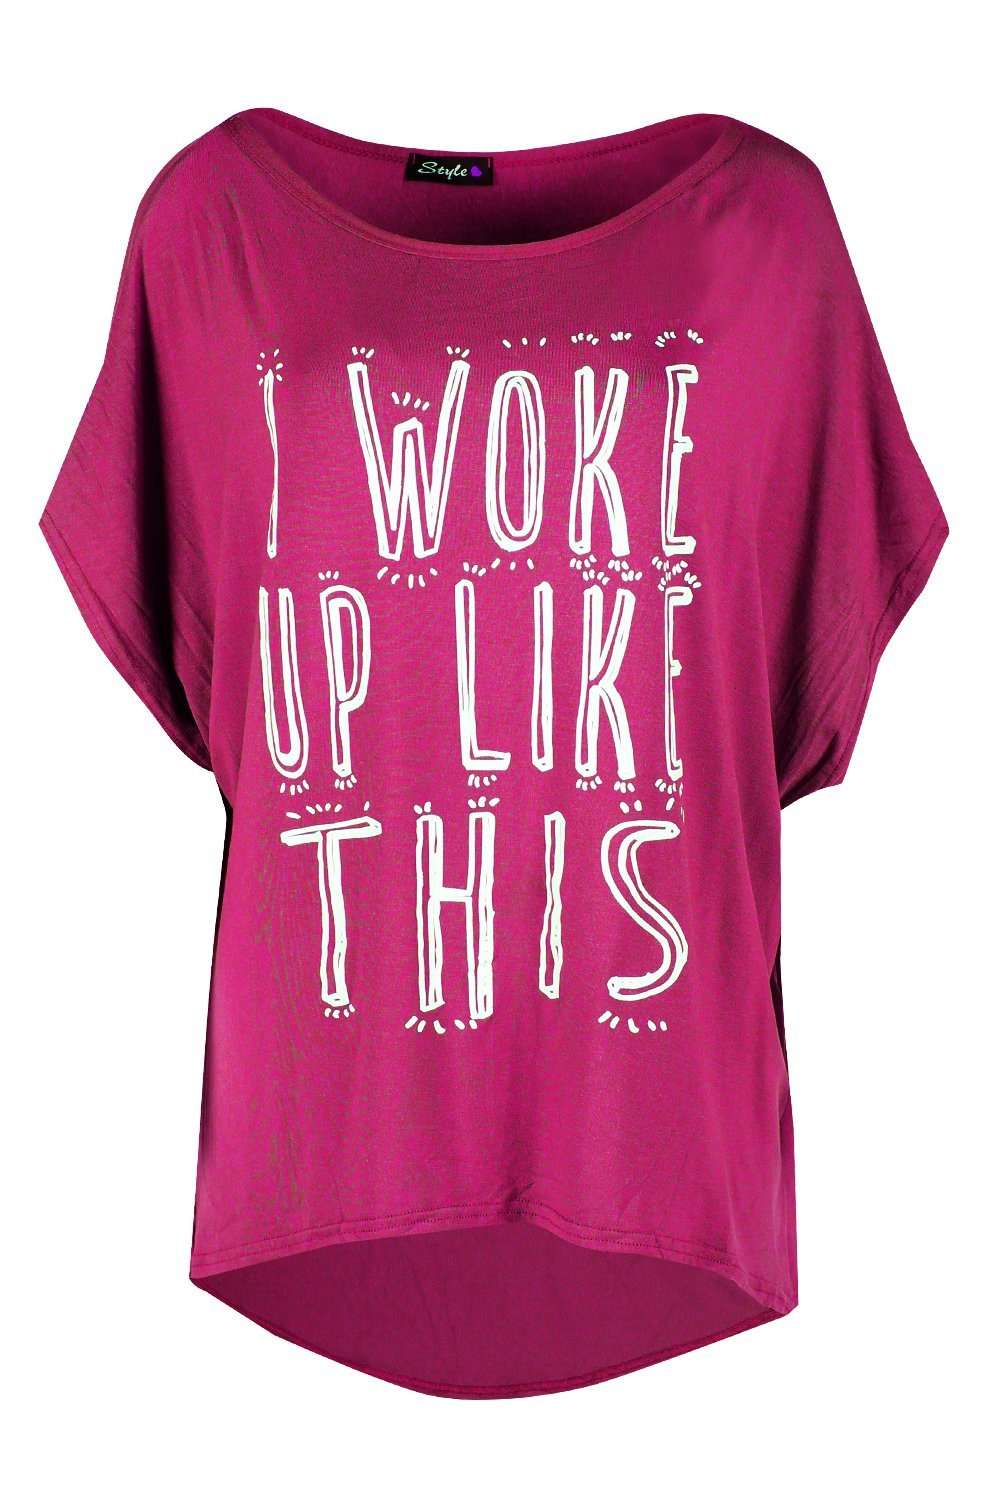 Carlie Beyonce Slogan Print Oversized Tshirt - bejealous-com